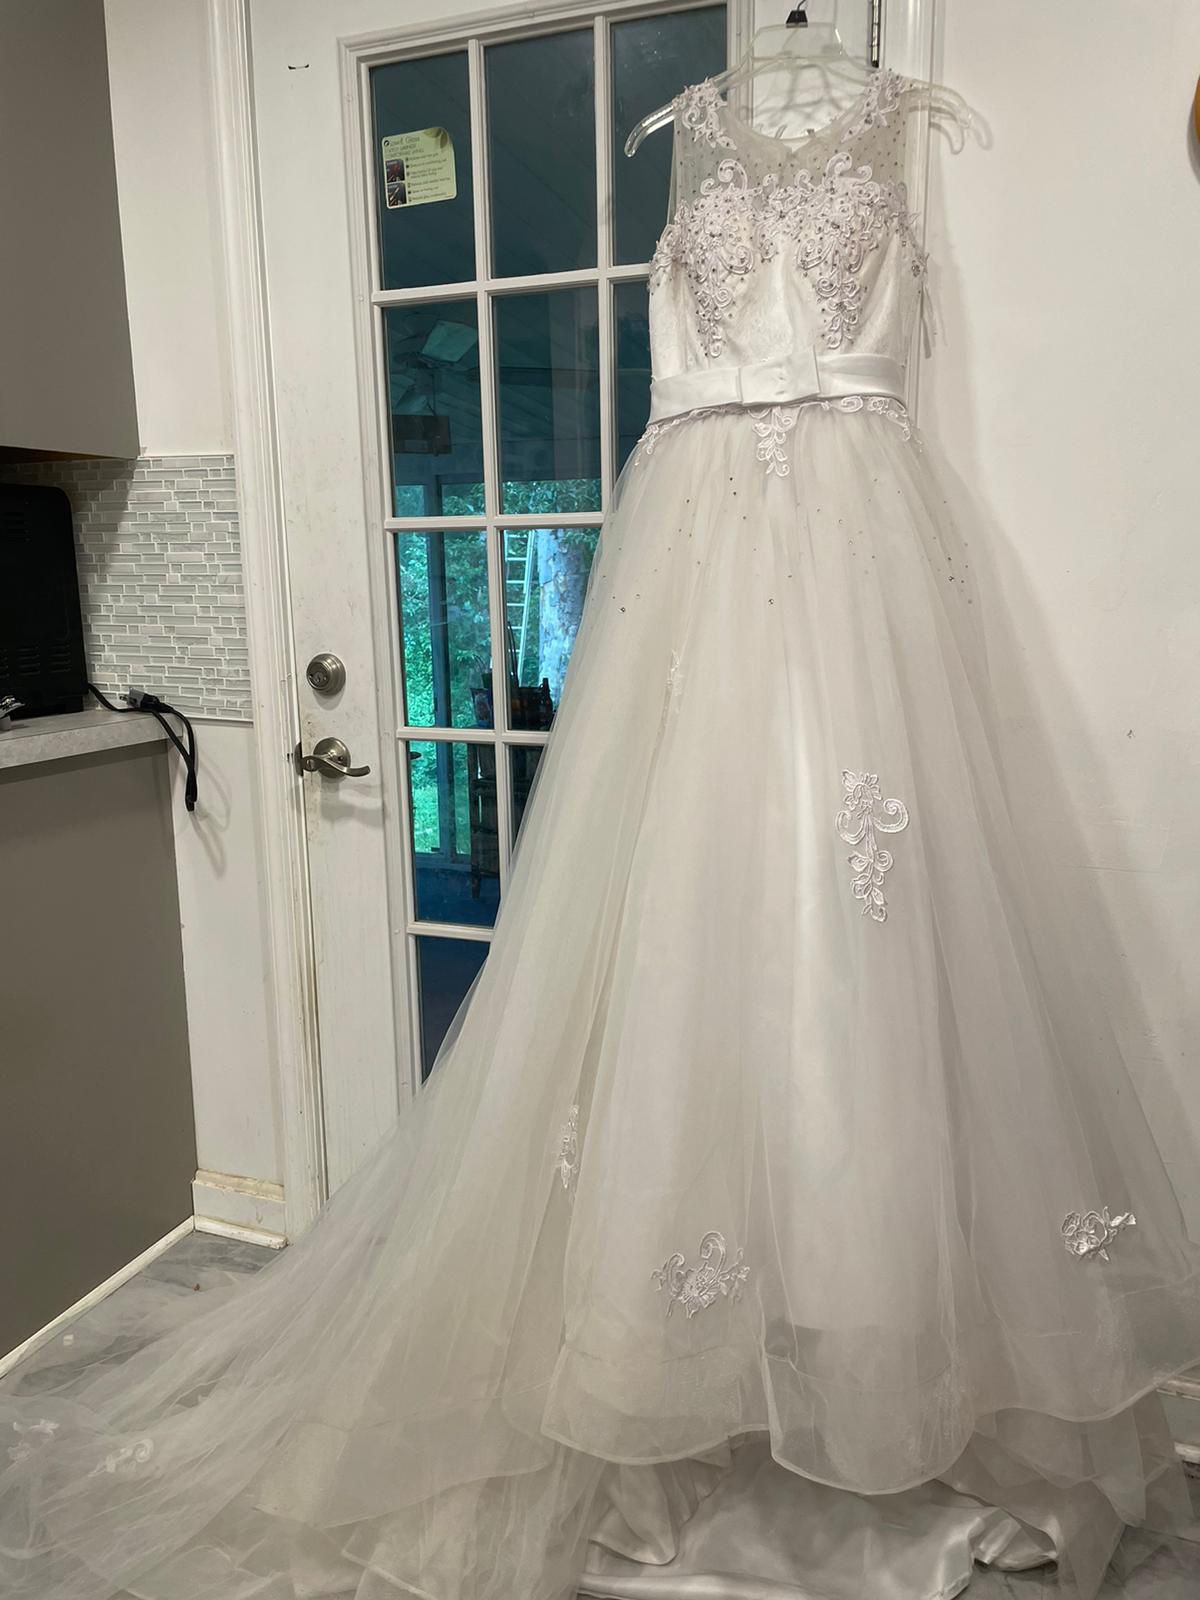 Dress -"Wedding Dress"